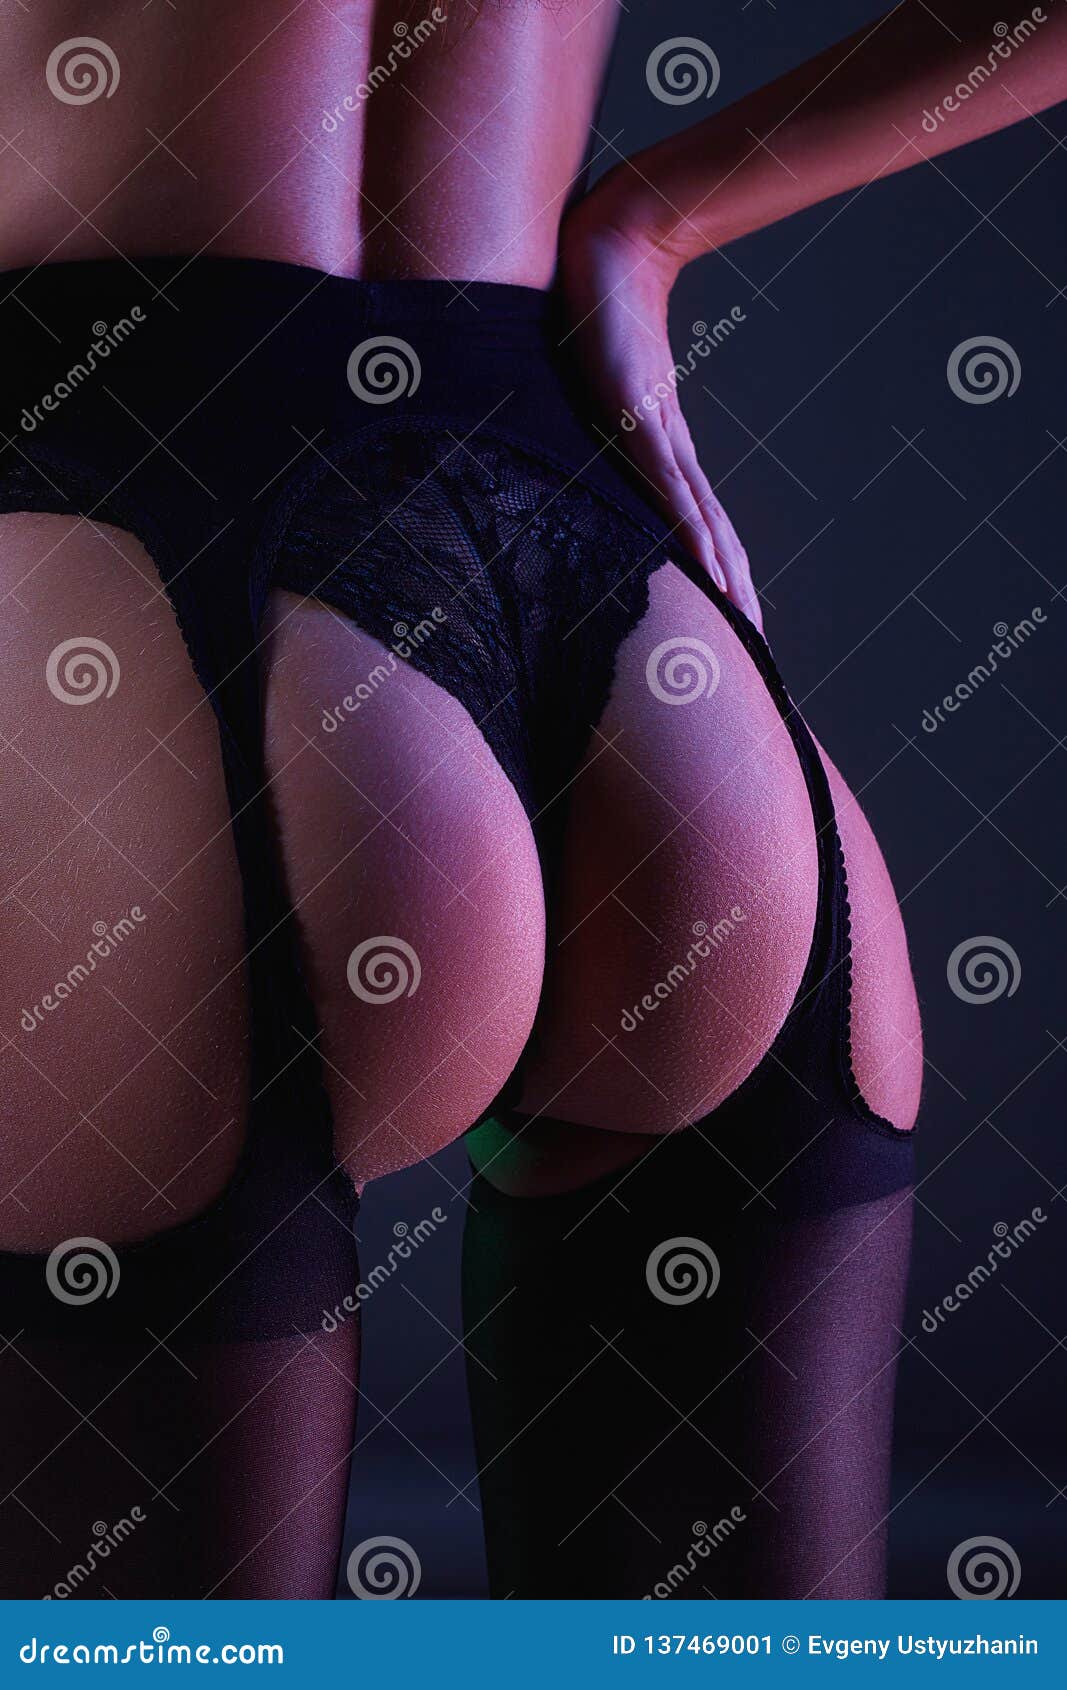 Sexual Lingerie on Body Girl Stock Image